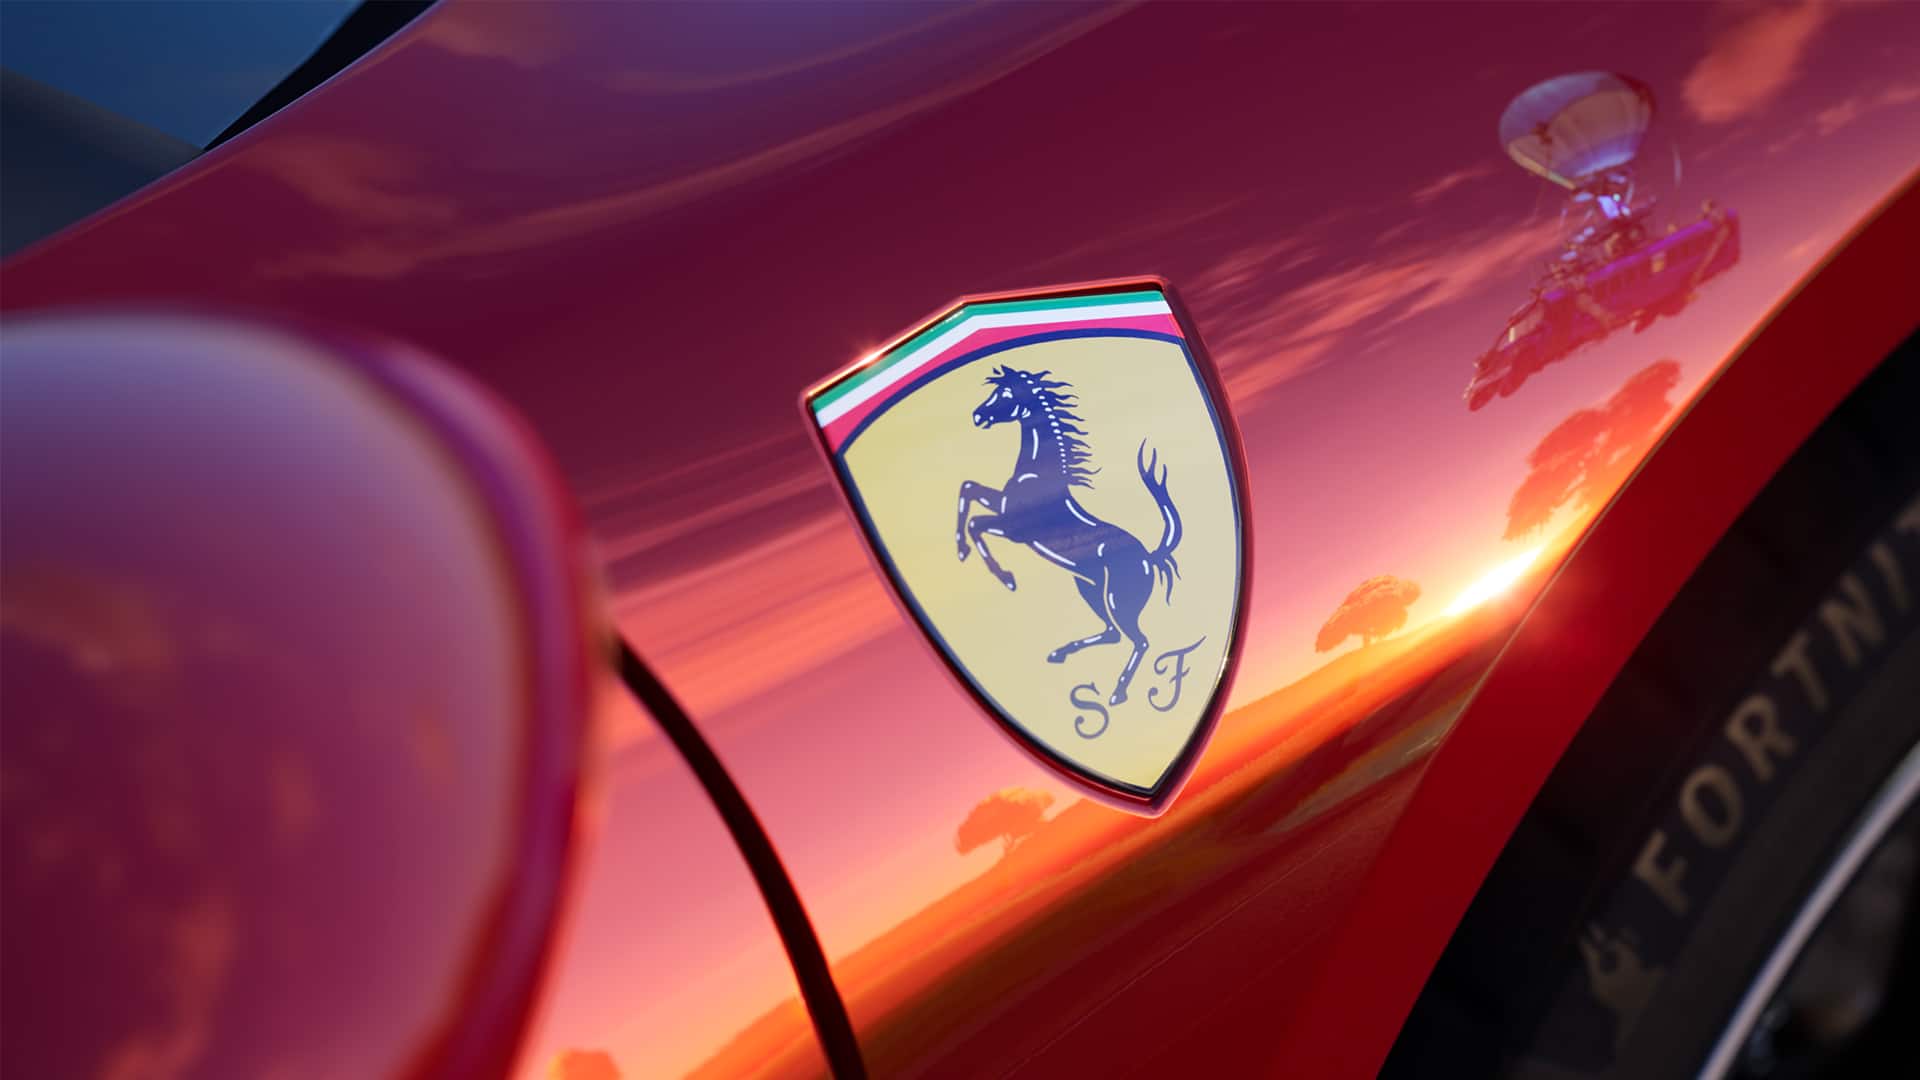 Fortnite Anade El Ferrari 296 Gtb Como Ultimo Vehiculo